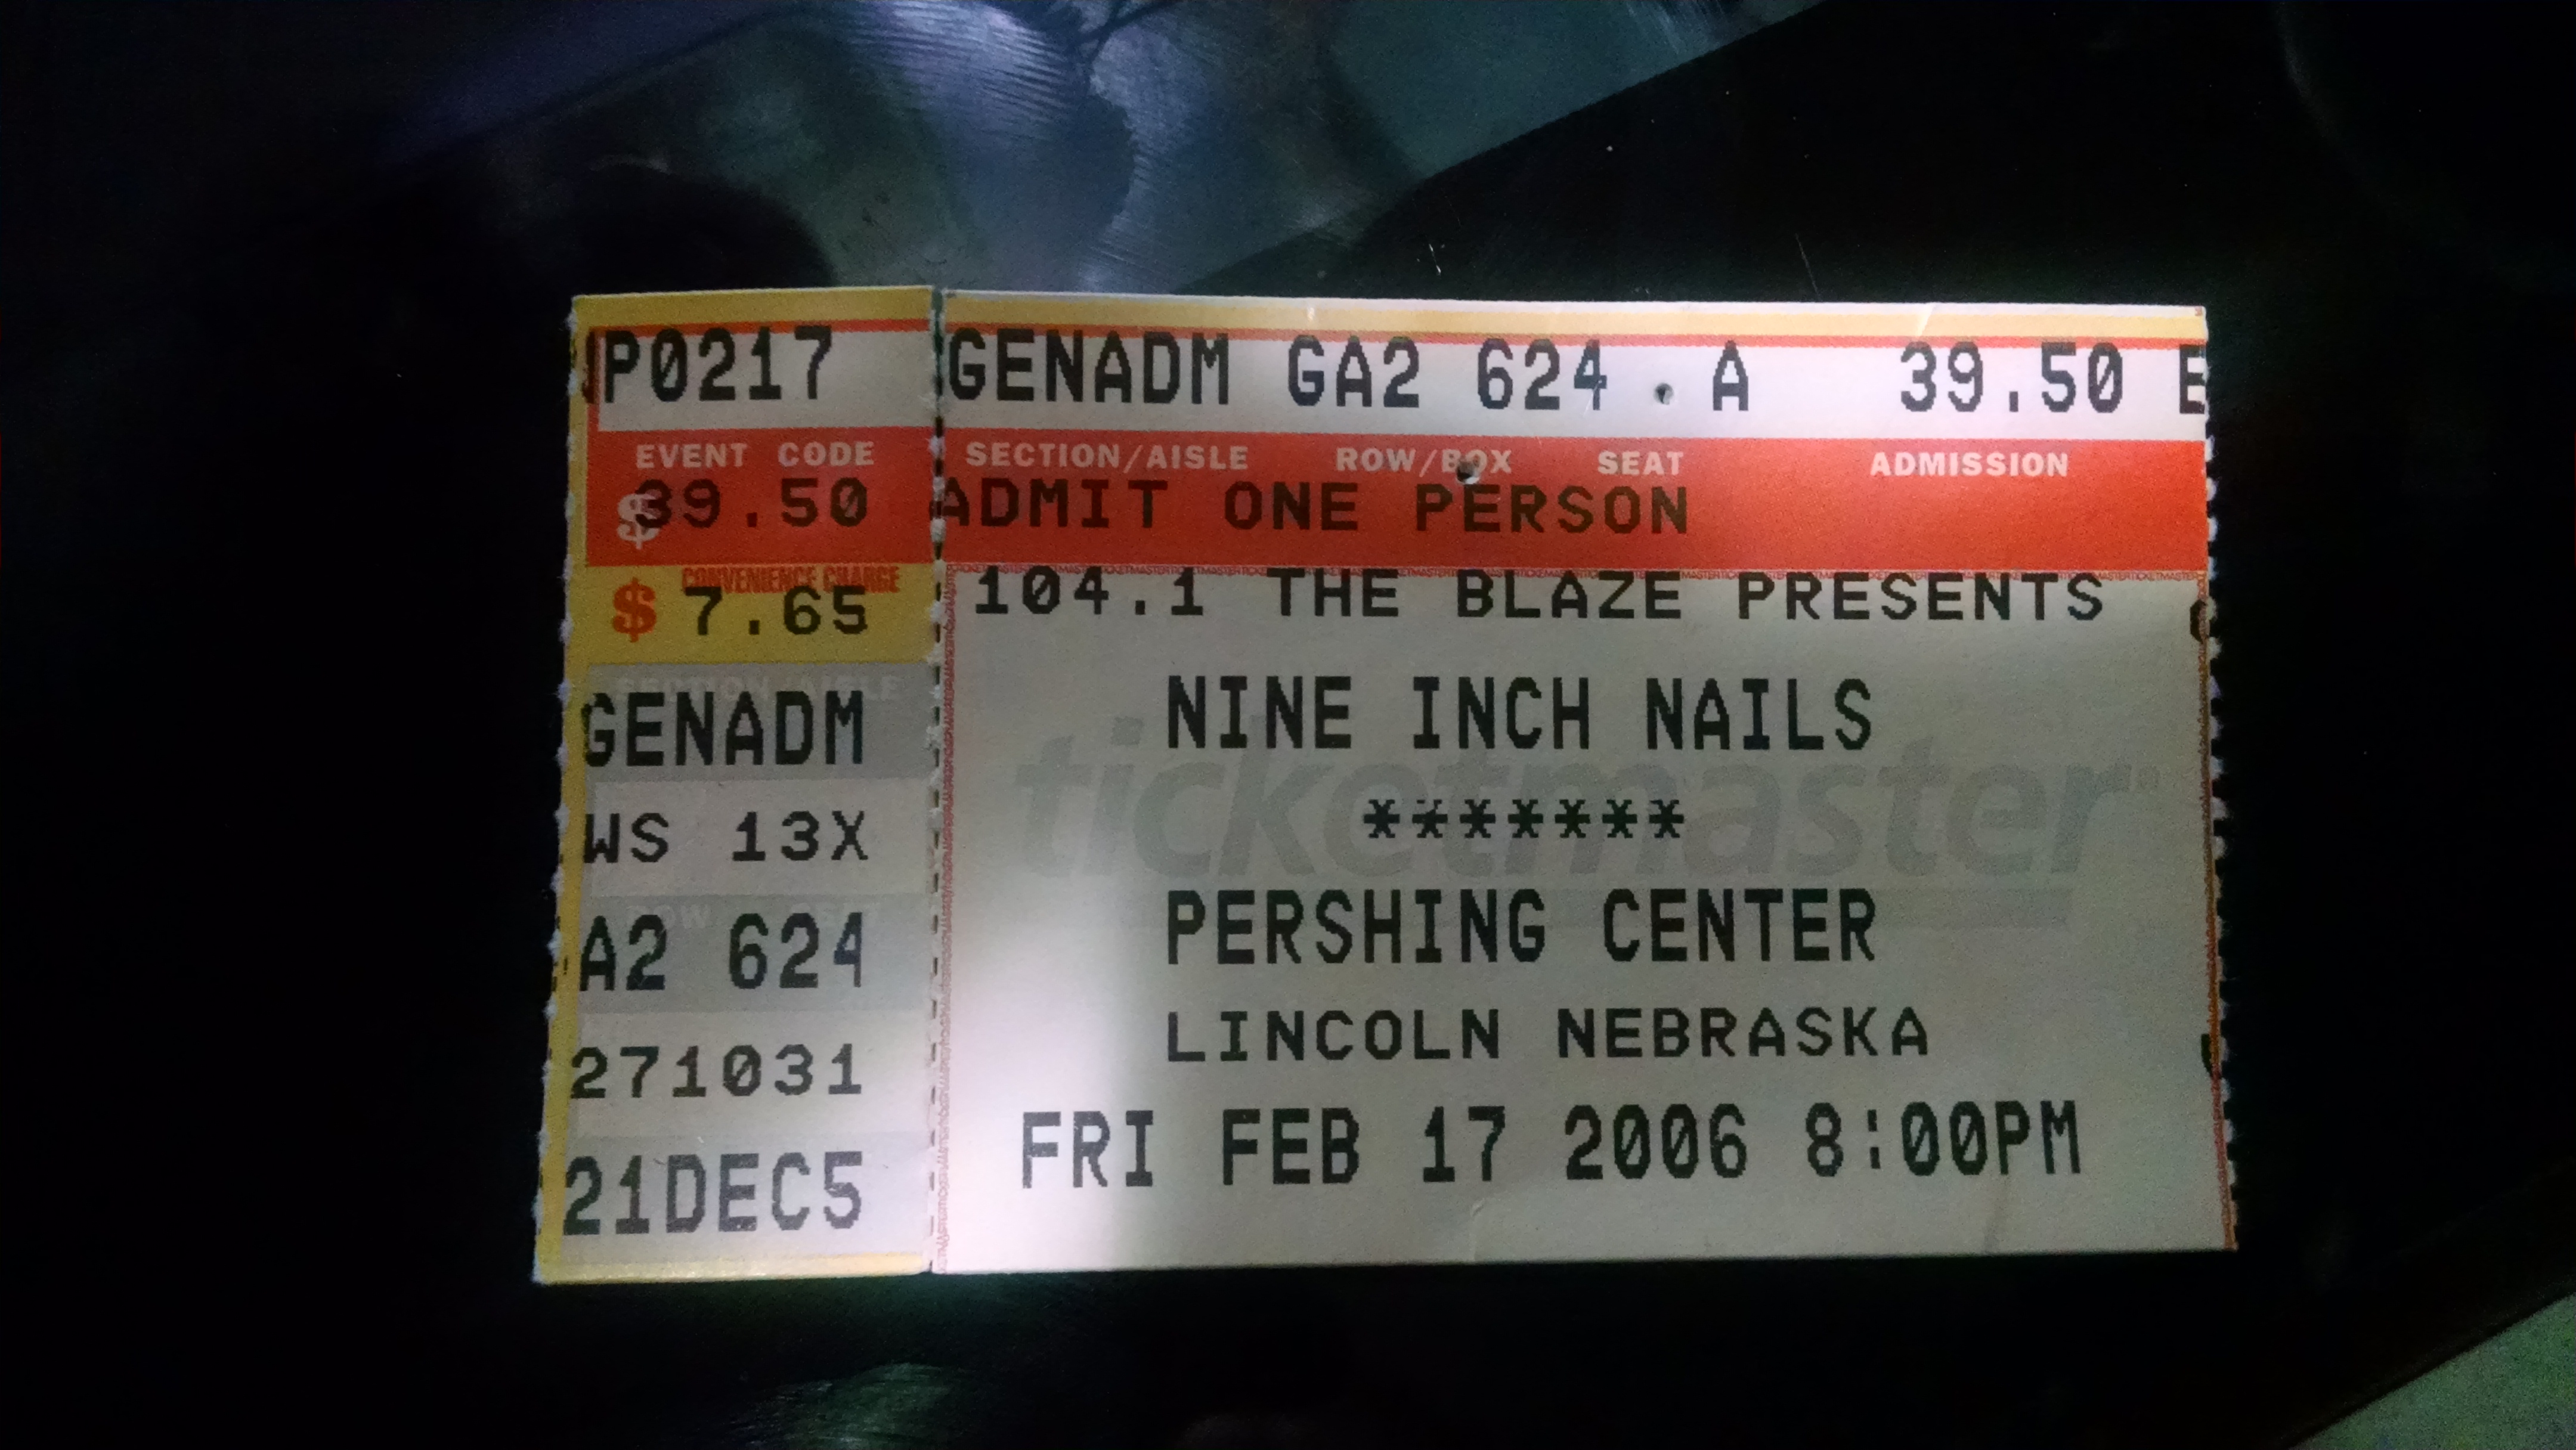 2006/02/17 Ticket